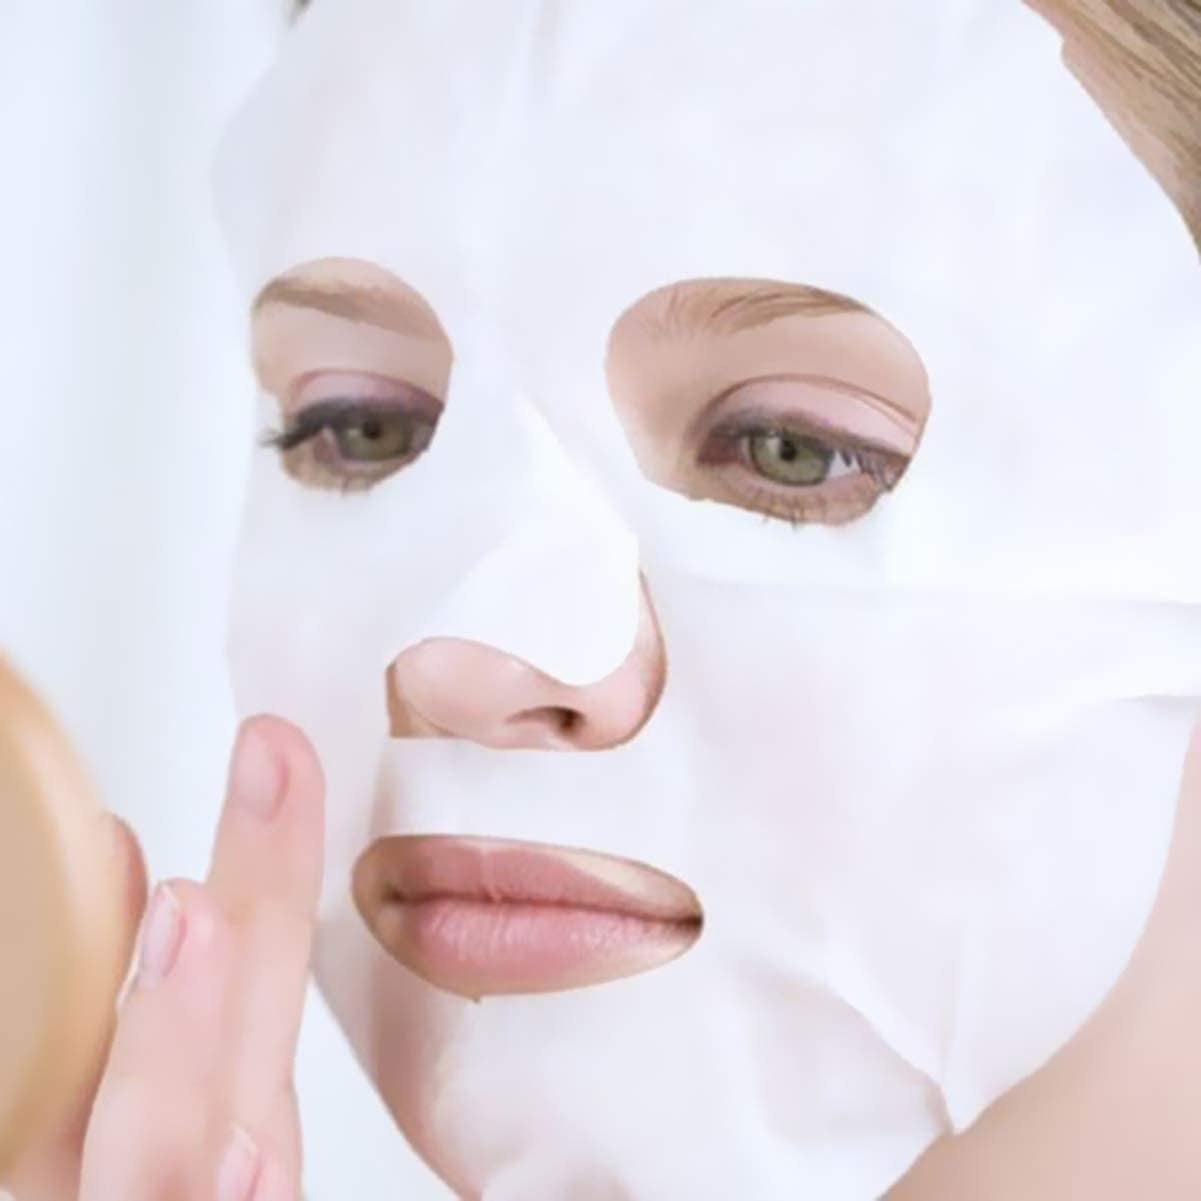 JNBS Disposable Spa Cotton Facial Mask Sheets (Pack of 100pcs)